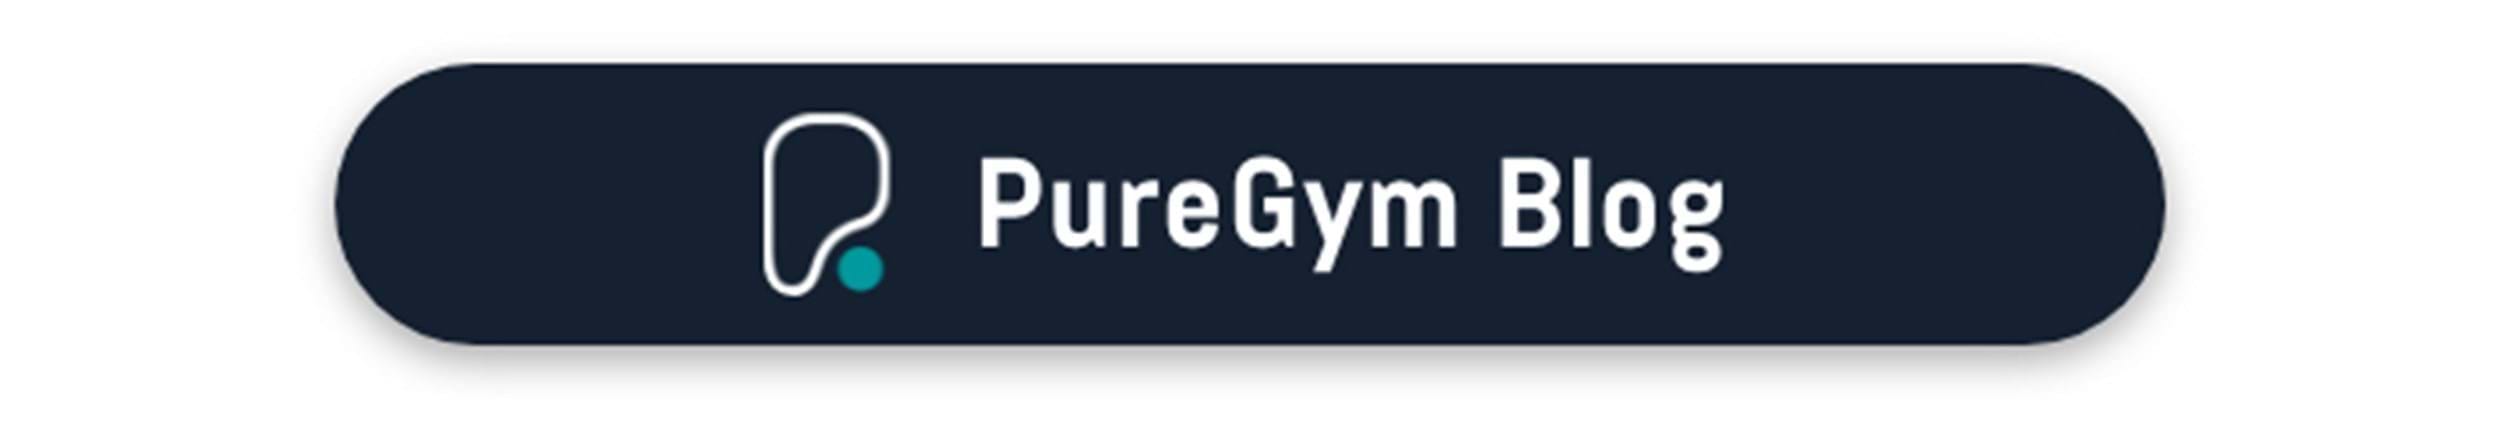 PureGym Blog